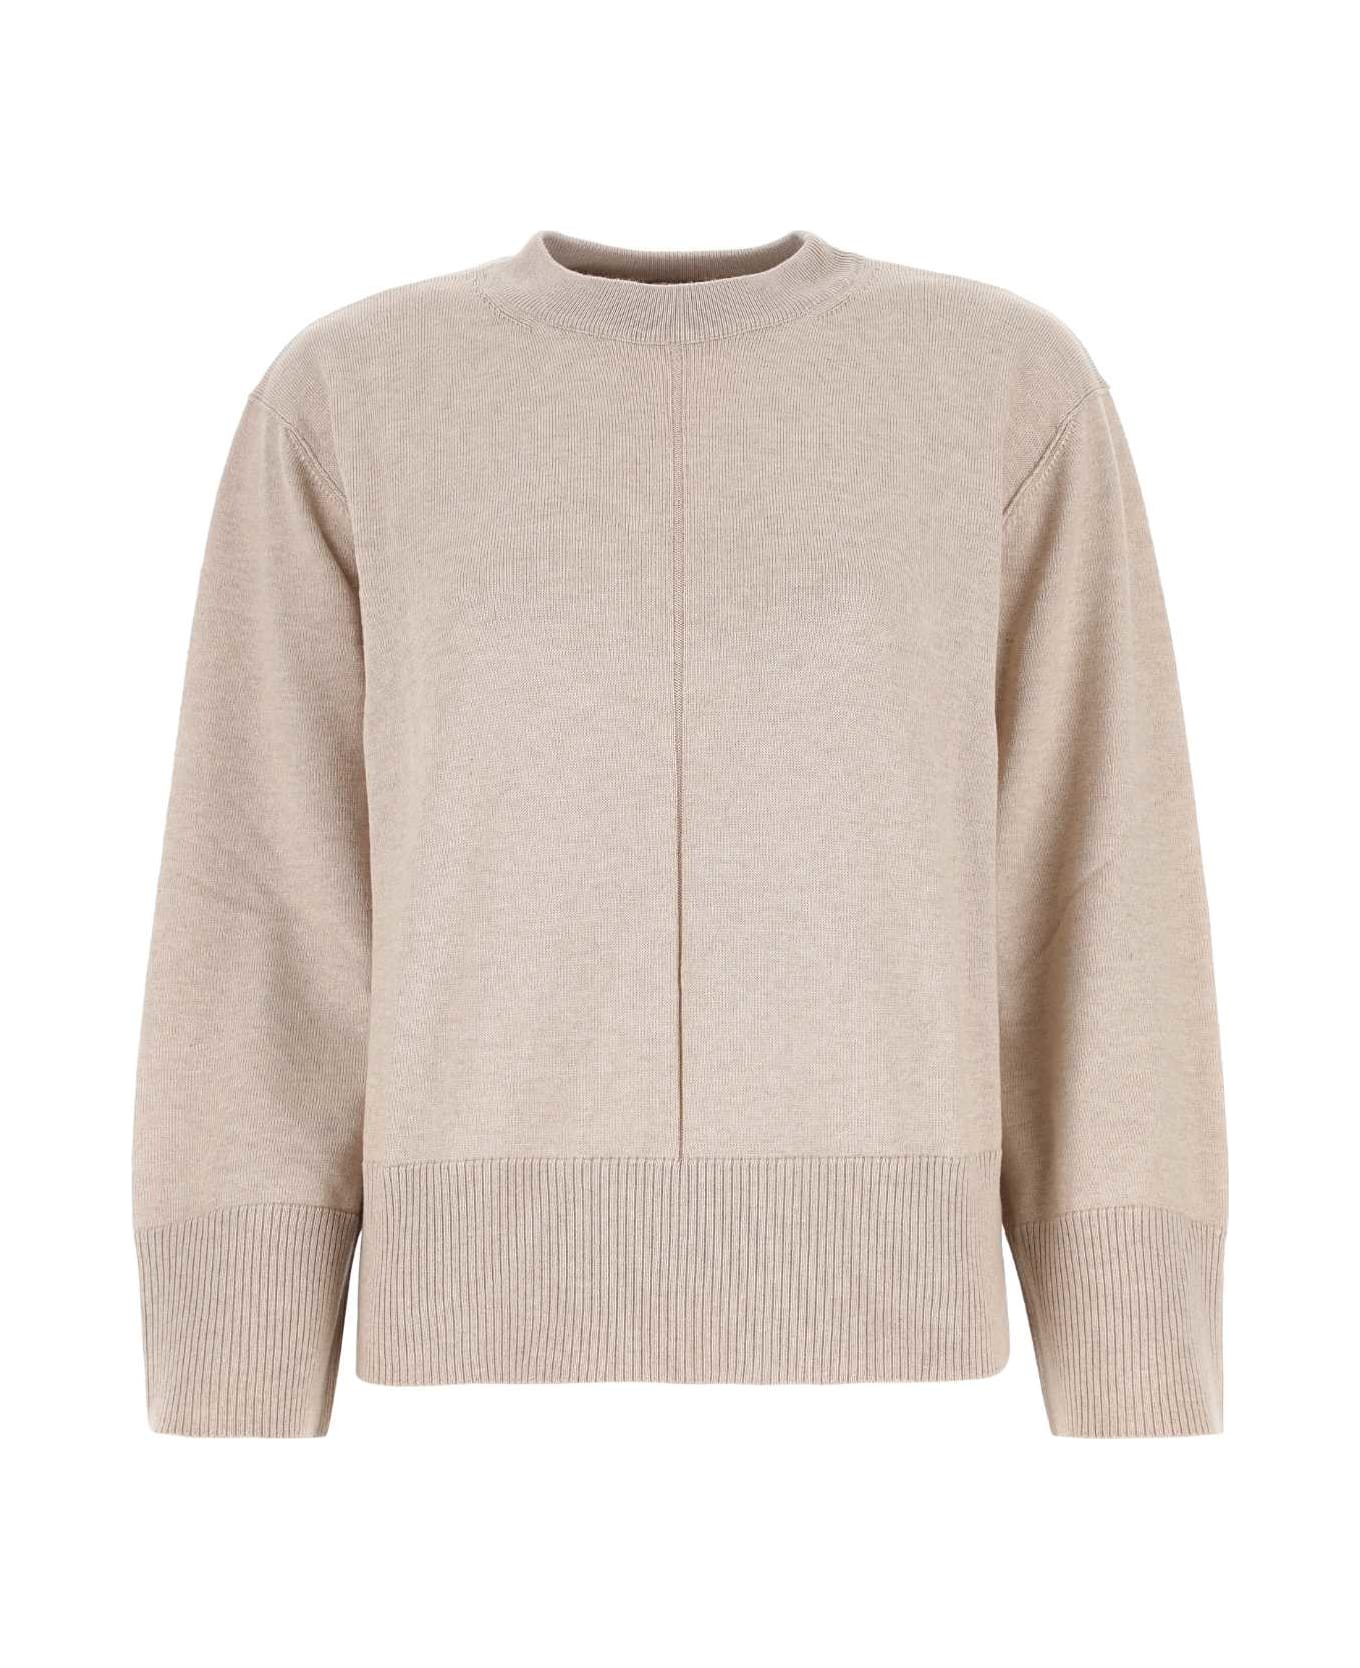 Woolrich Cappuccino Cotton Blend Sweater - 824